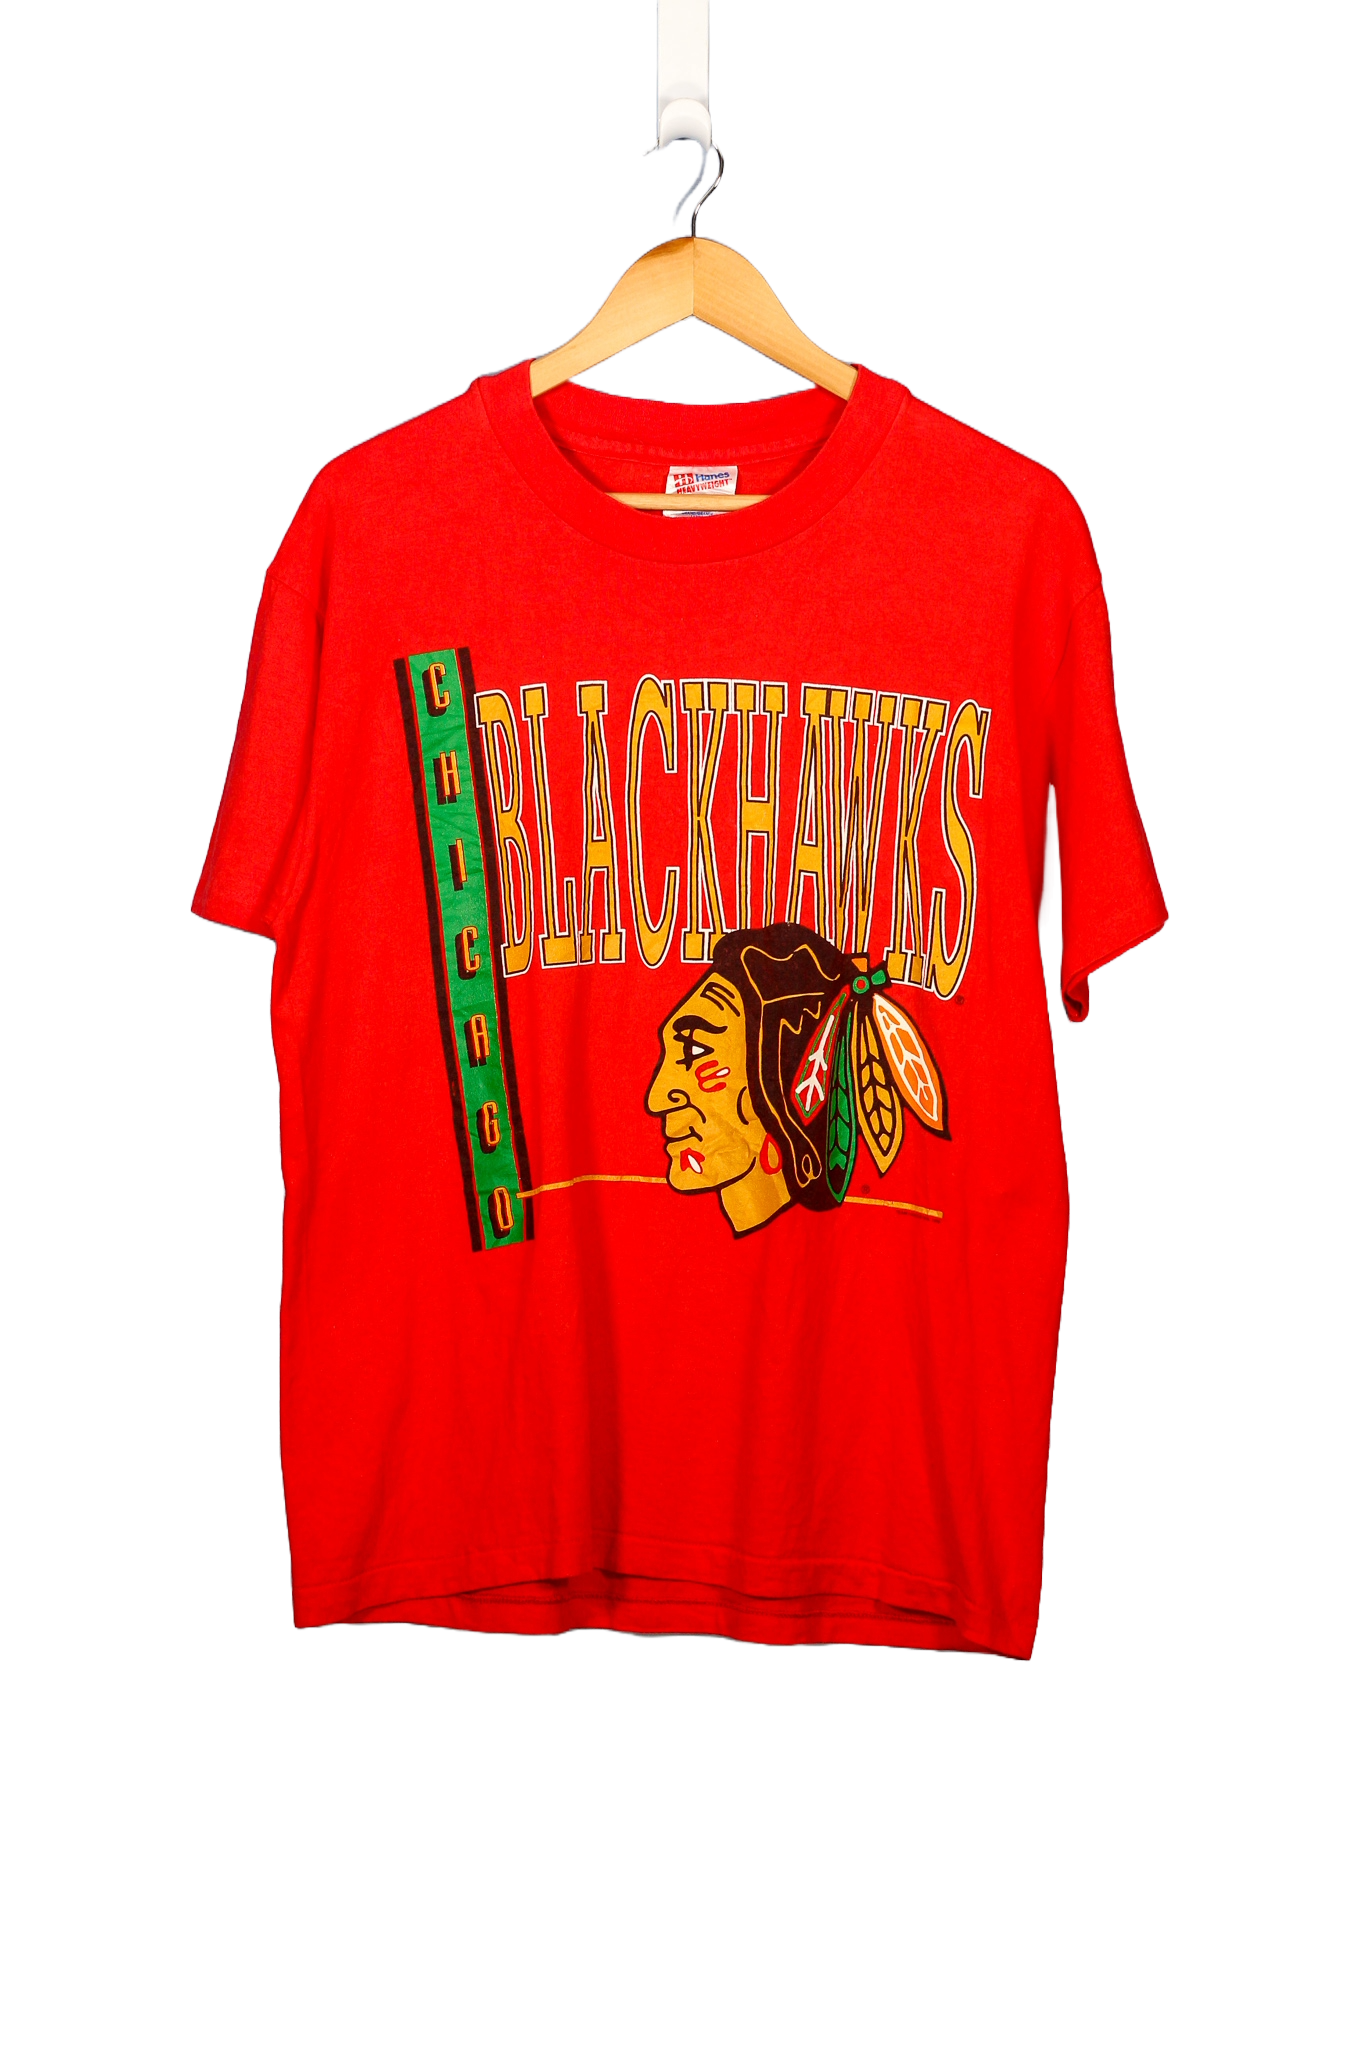 Vintage 1992 Chicago Blackhawks NHL T-Shirt - M